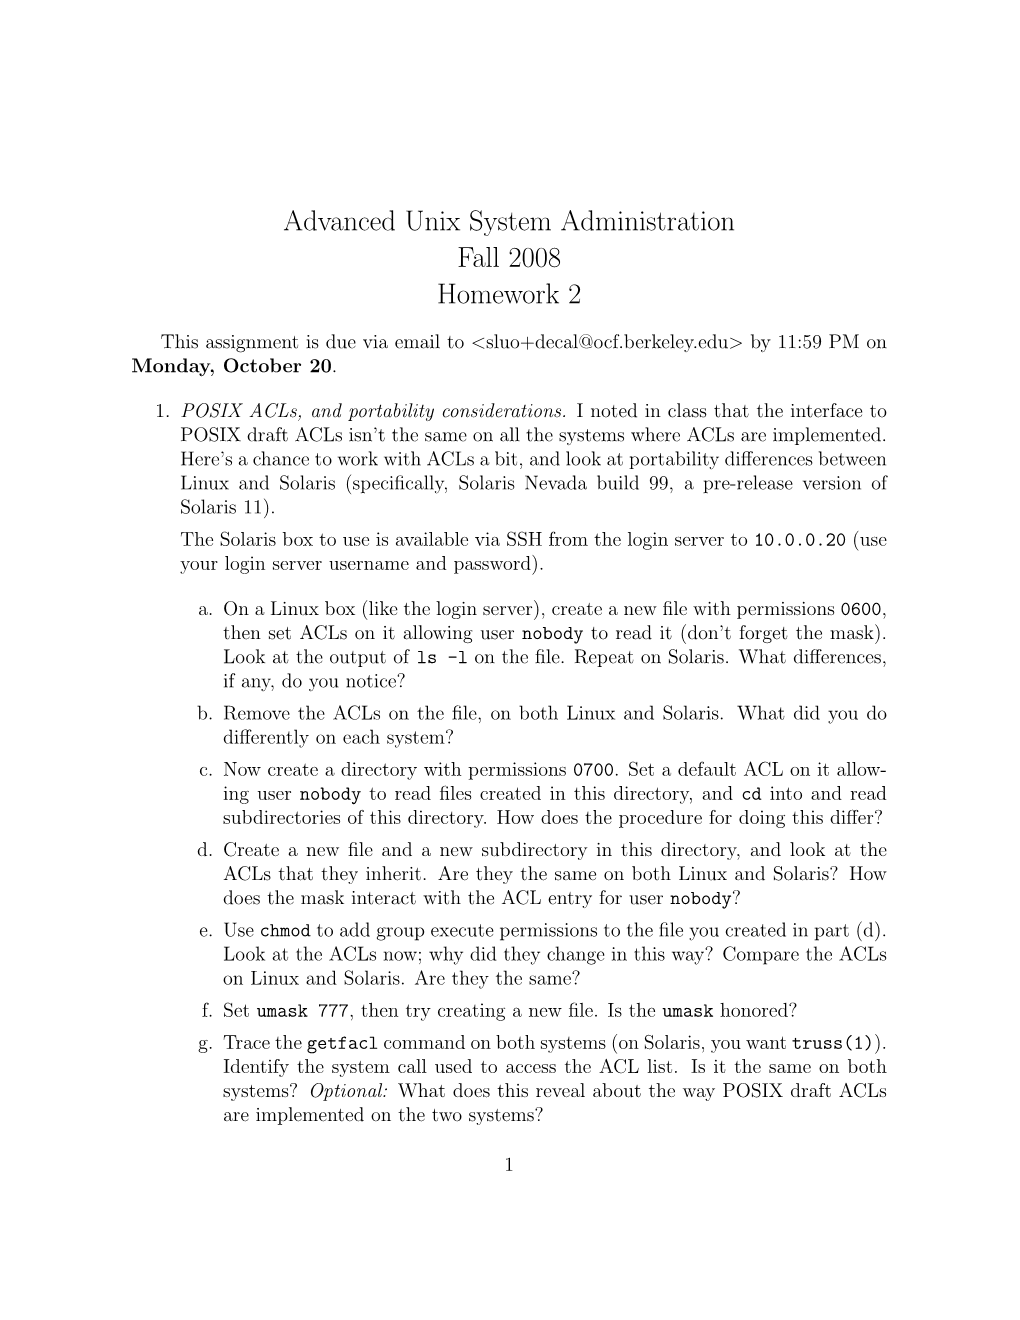 Advanced Unix System Administration Fall 2008 Homework 2